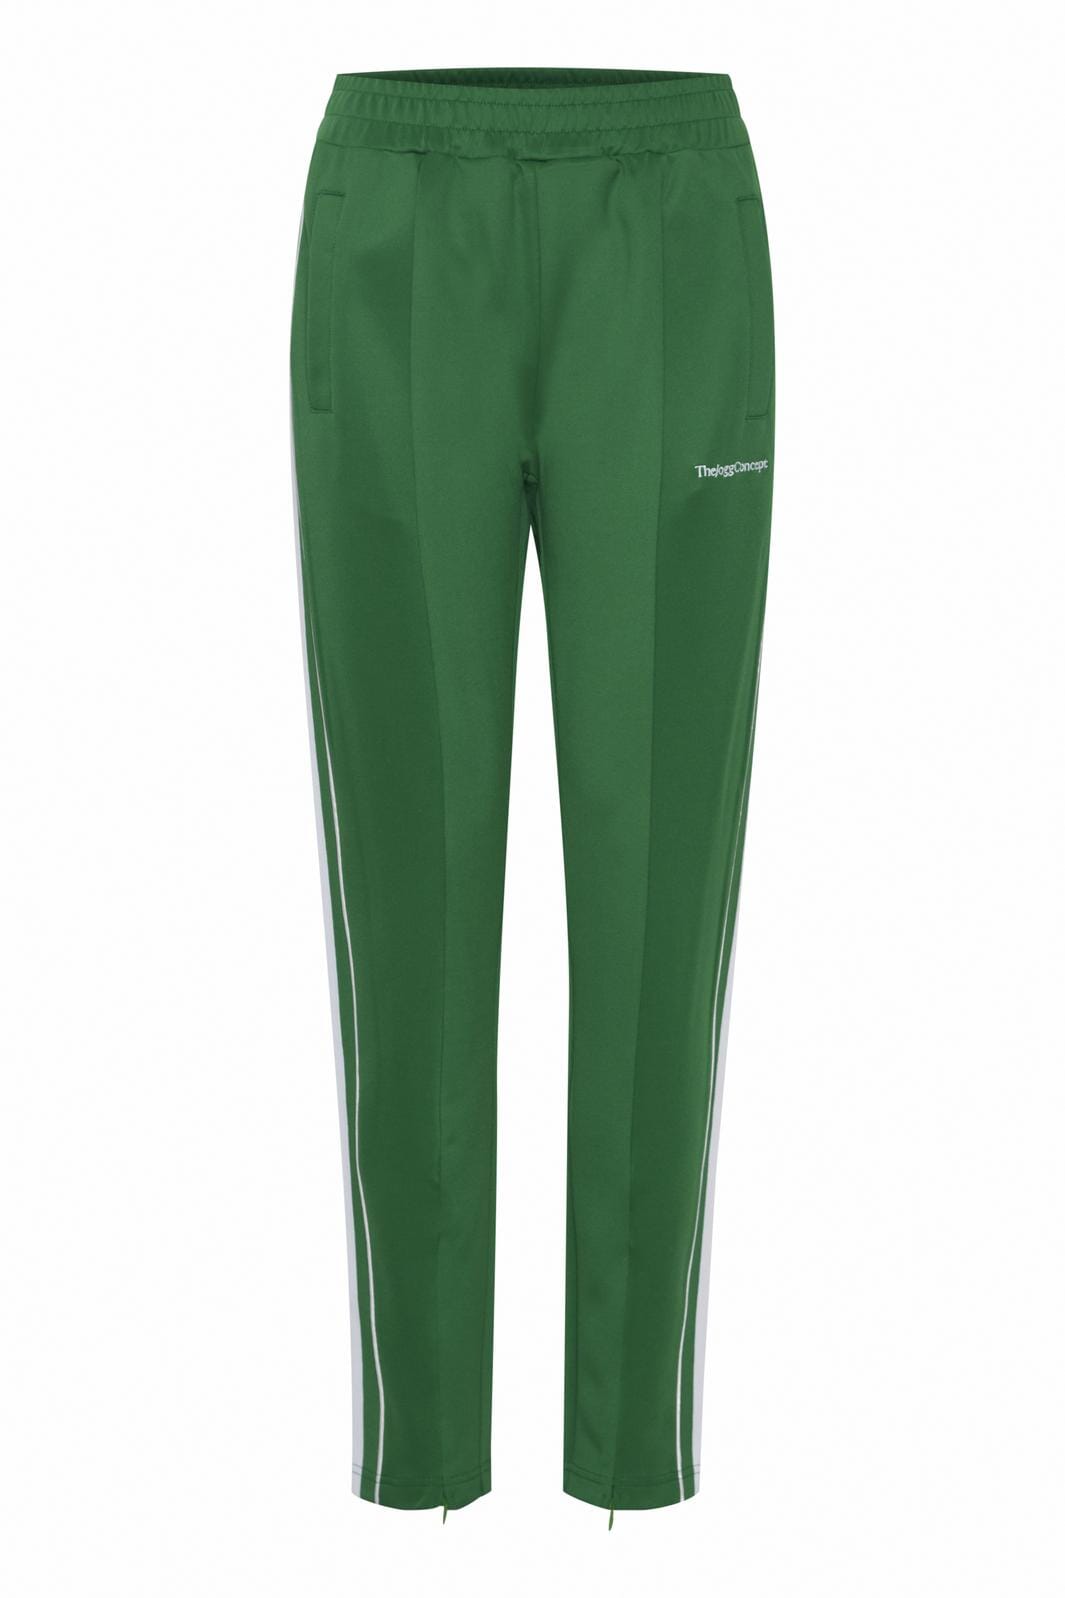 The Jogg Concept - Jcsima Piping Pants - Verdant Green Mix